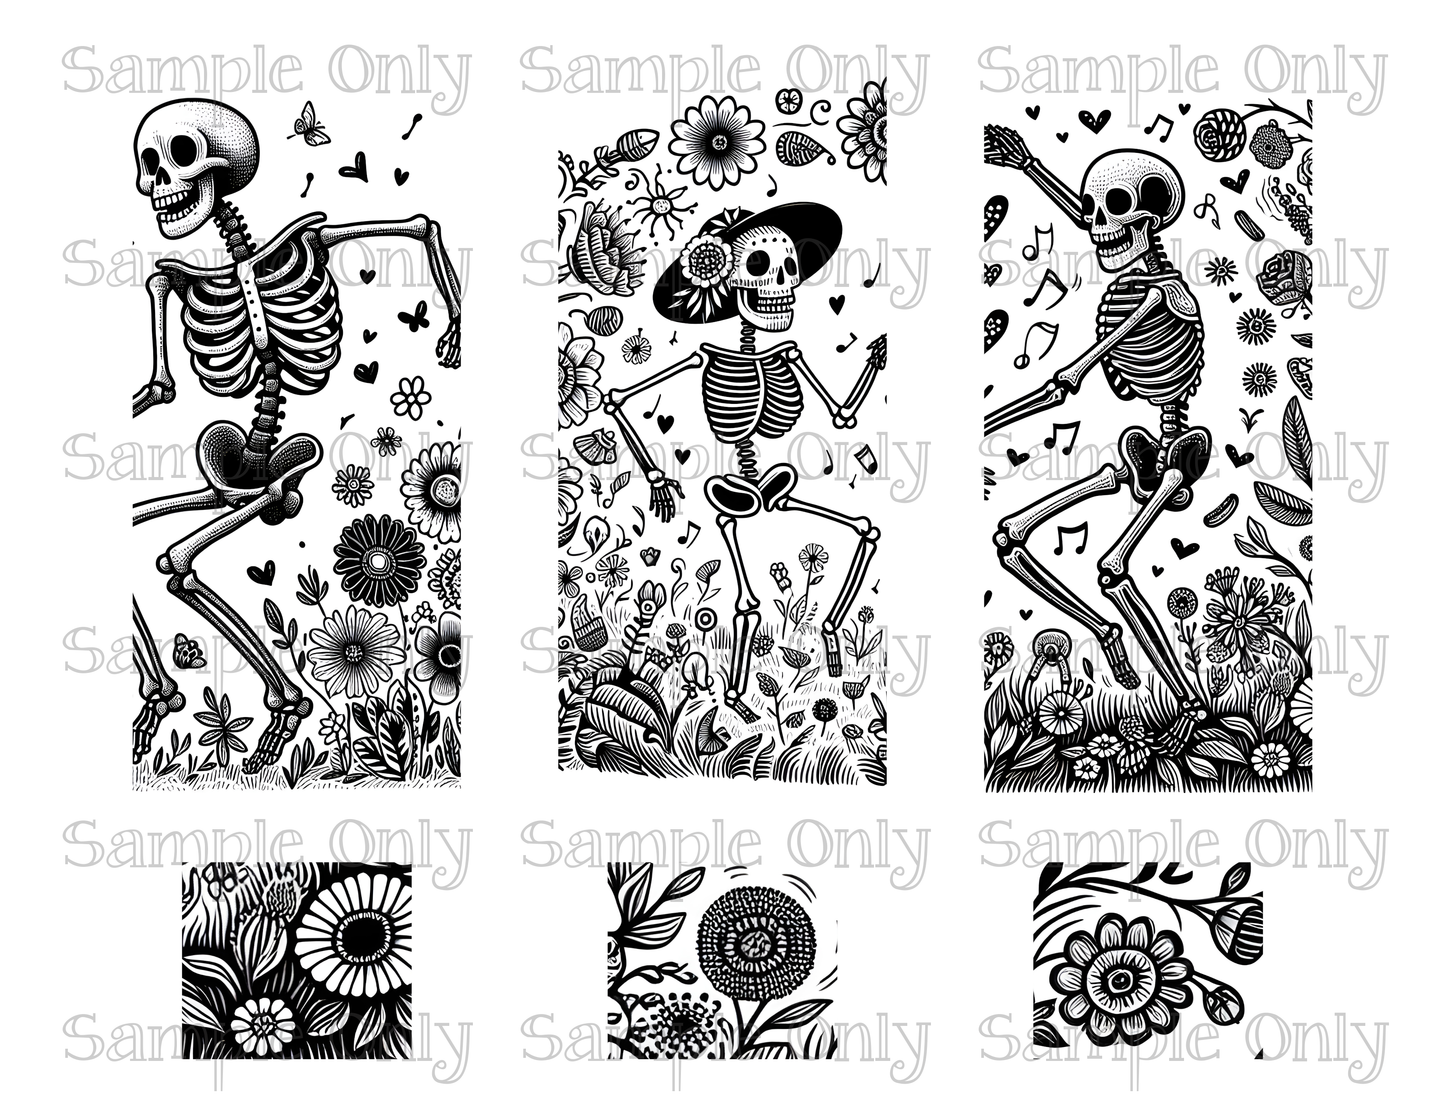 OJC X LLG Dancing Skeletons Image For Polymer Clay Transfer Sheet DIGITAL OR PRINTED